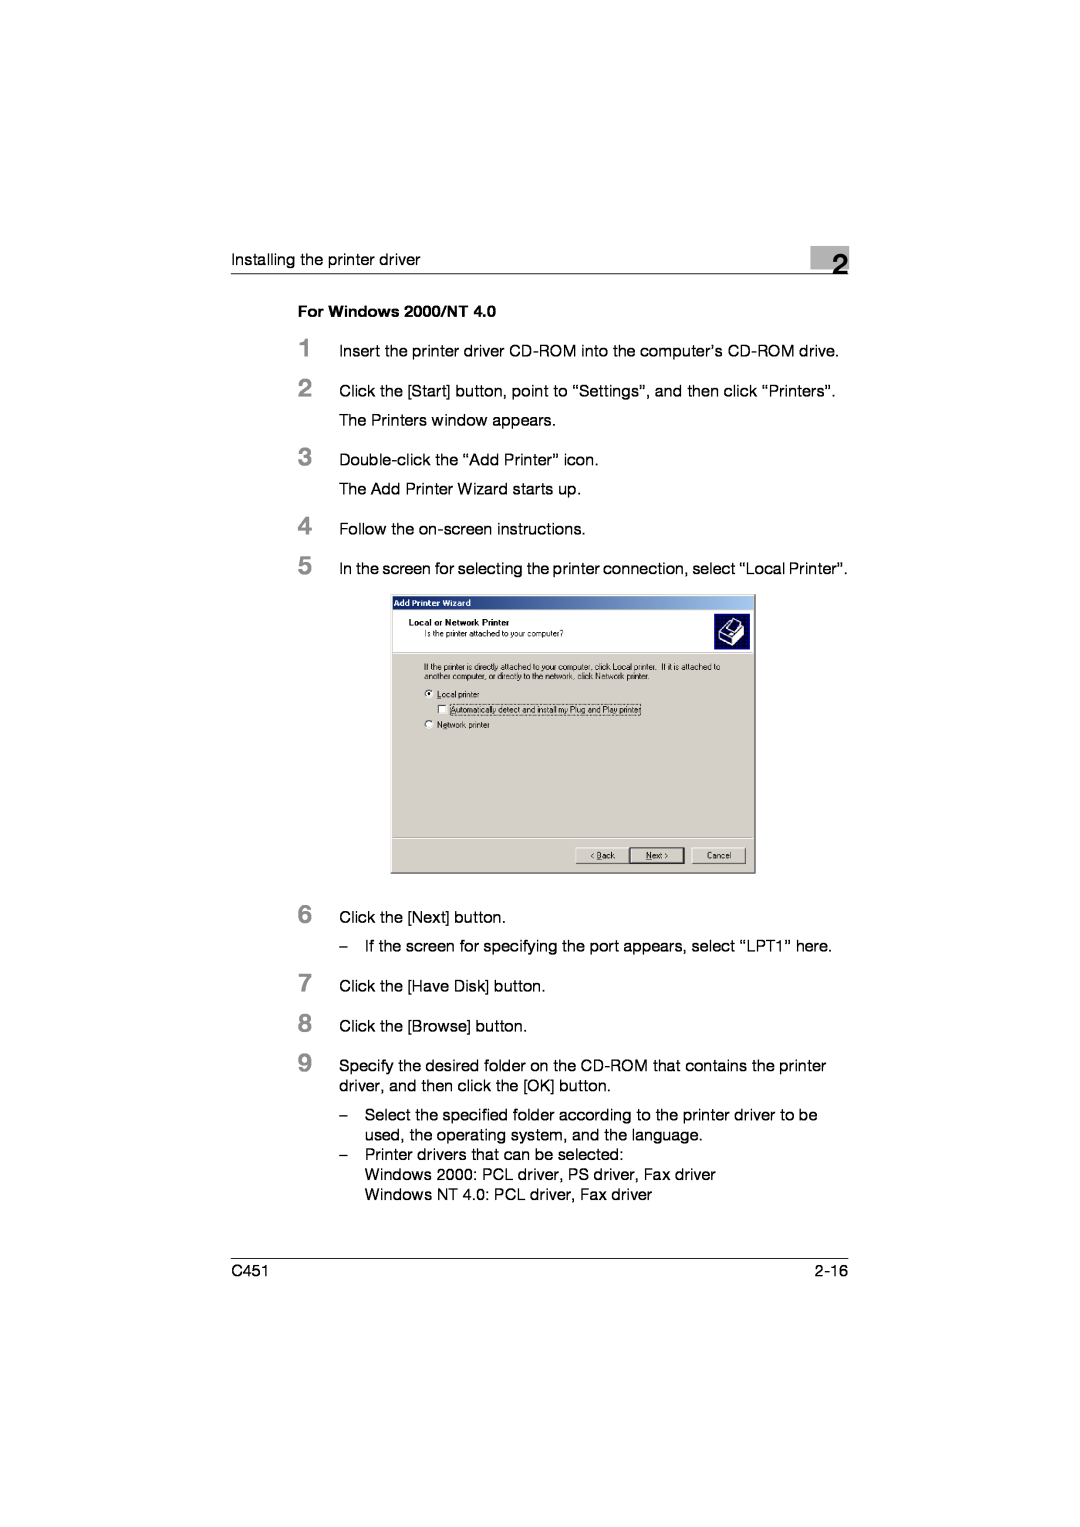 Konica Minolta C451 manual 6 7 8 9, For Windows 2000/NT 